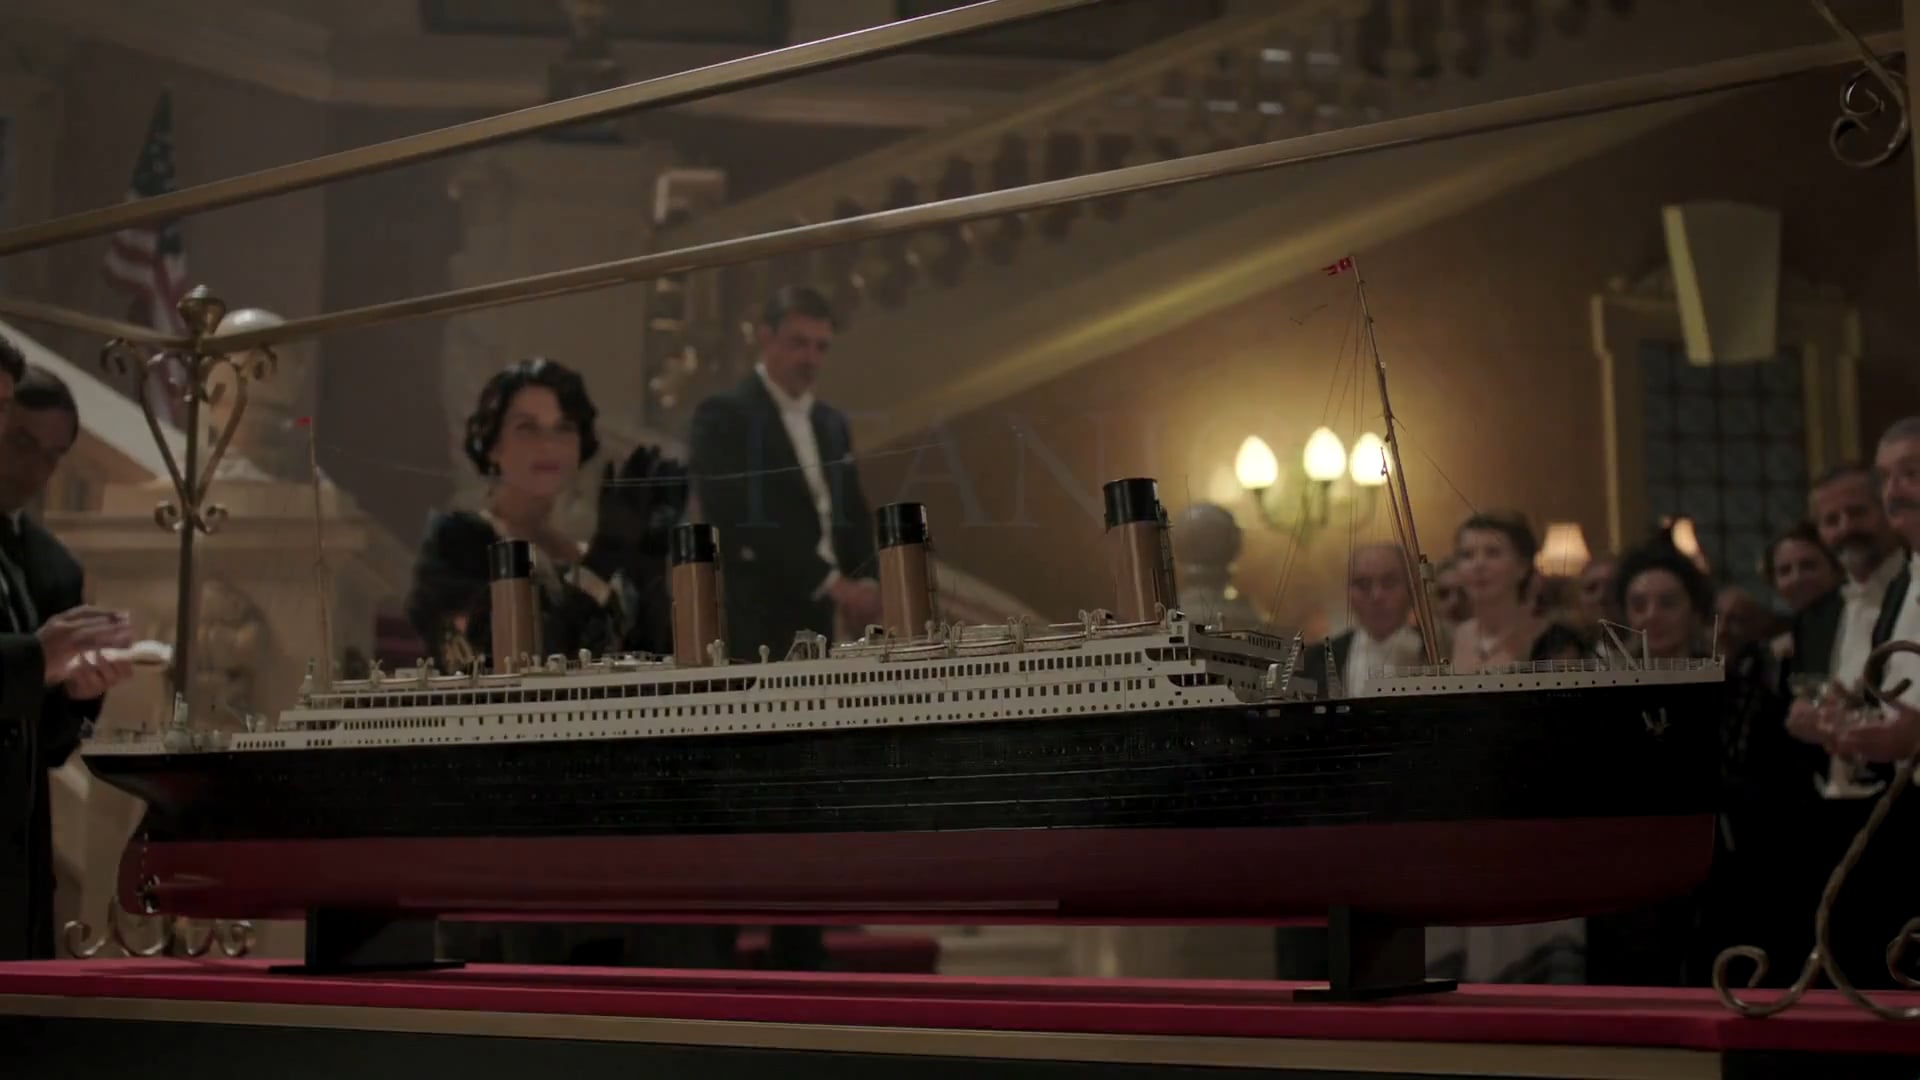 Titanic Blood and Steel (trailer) on Vimeo